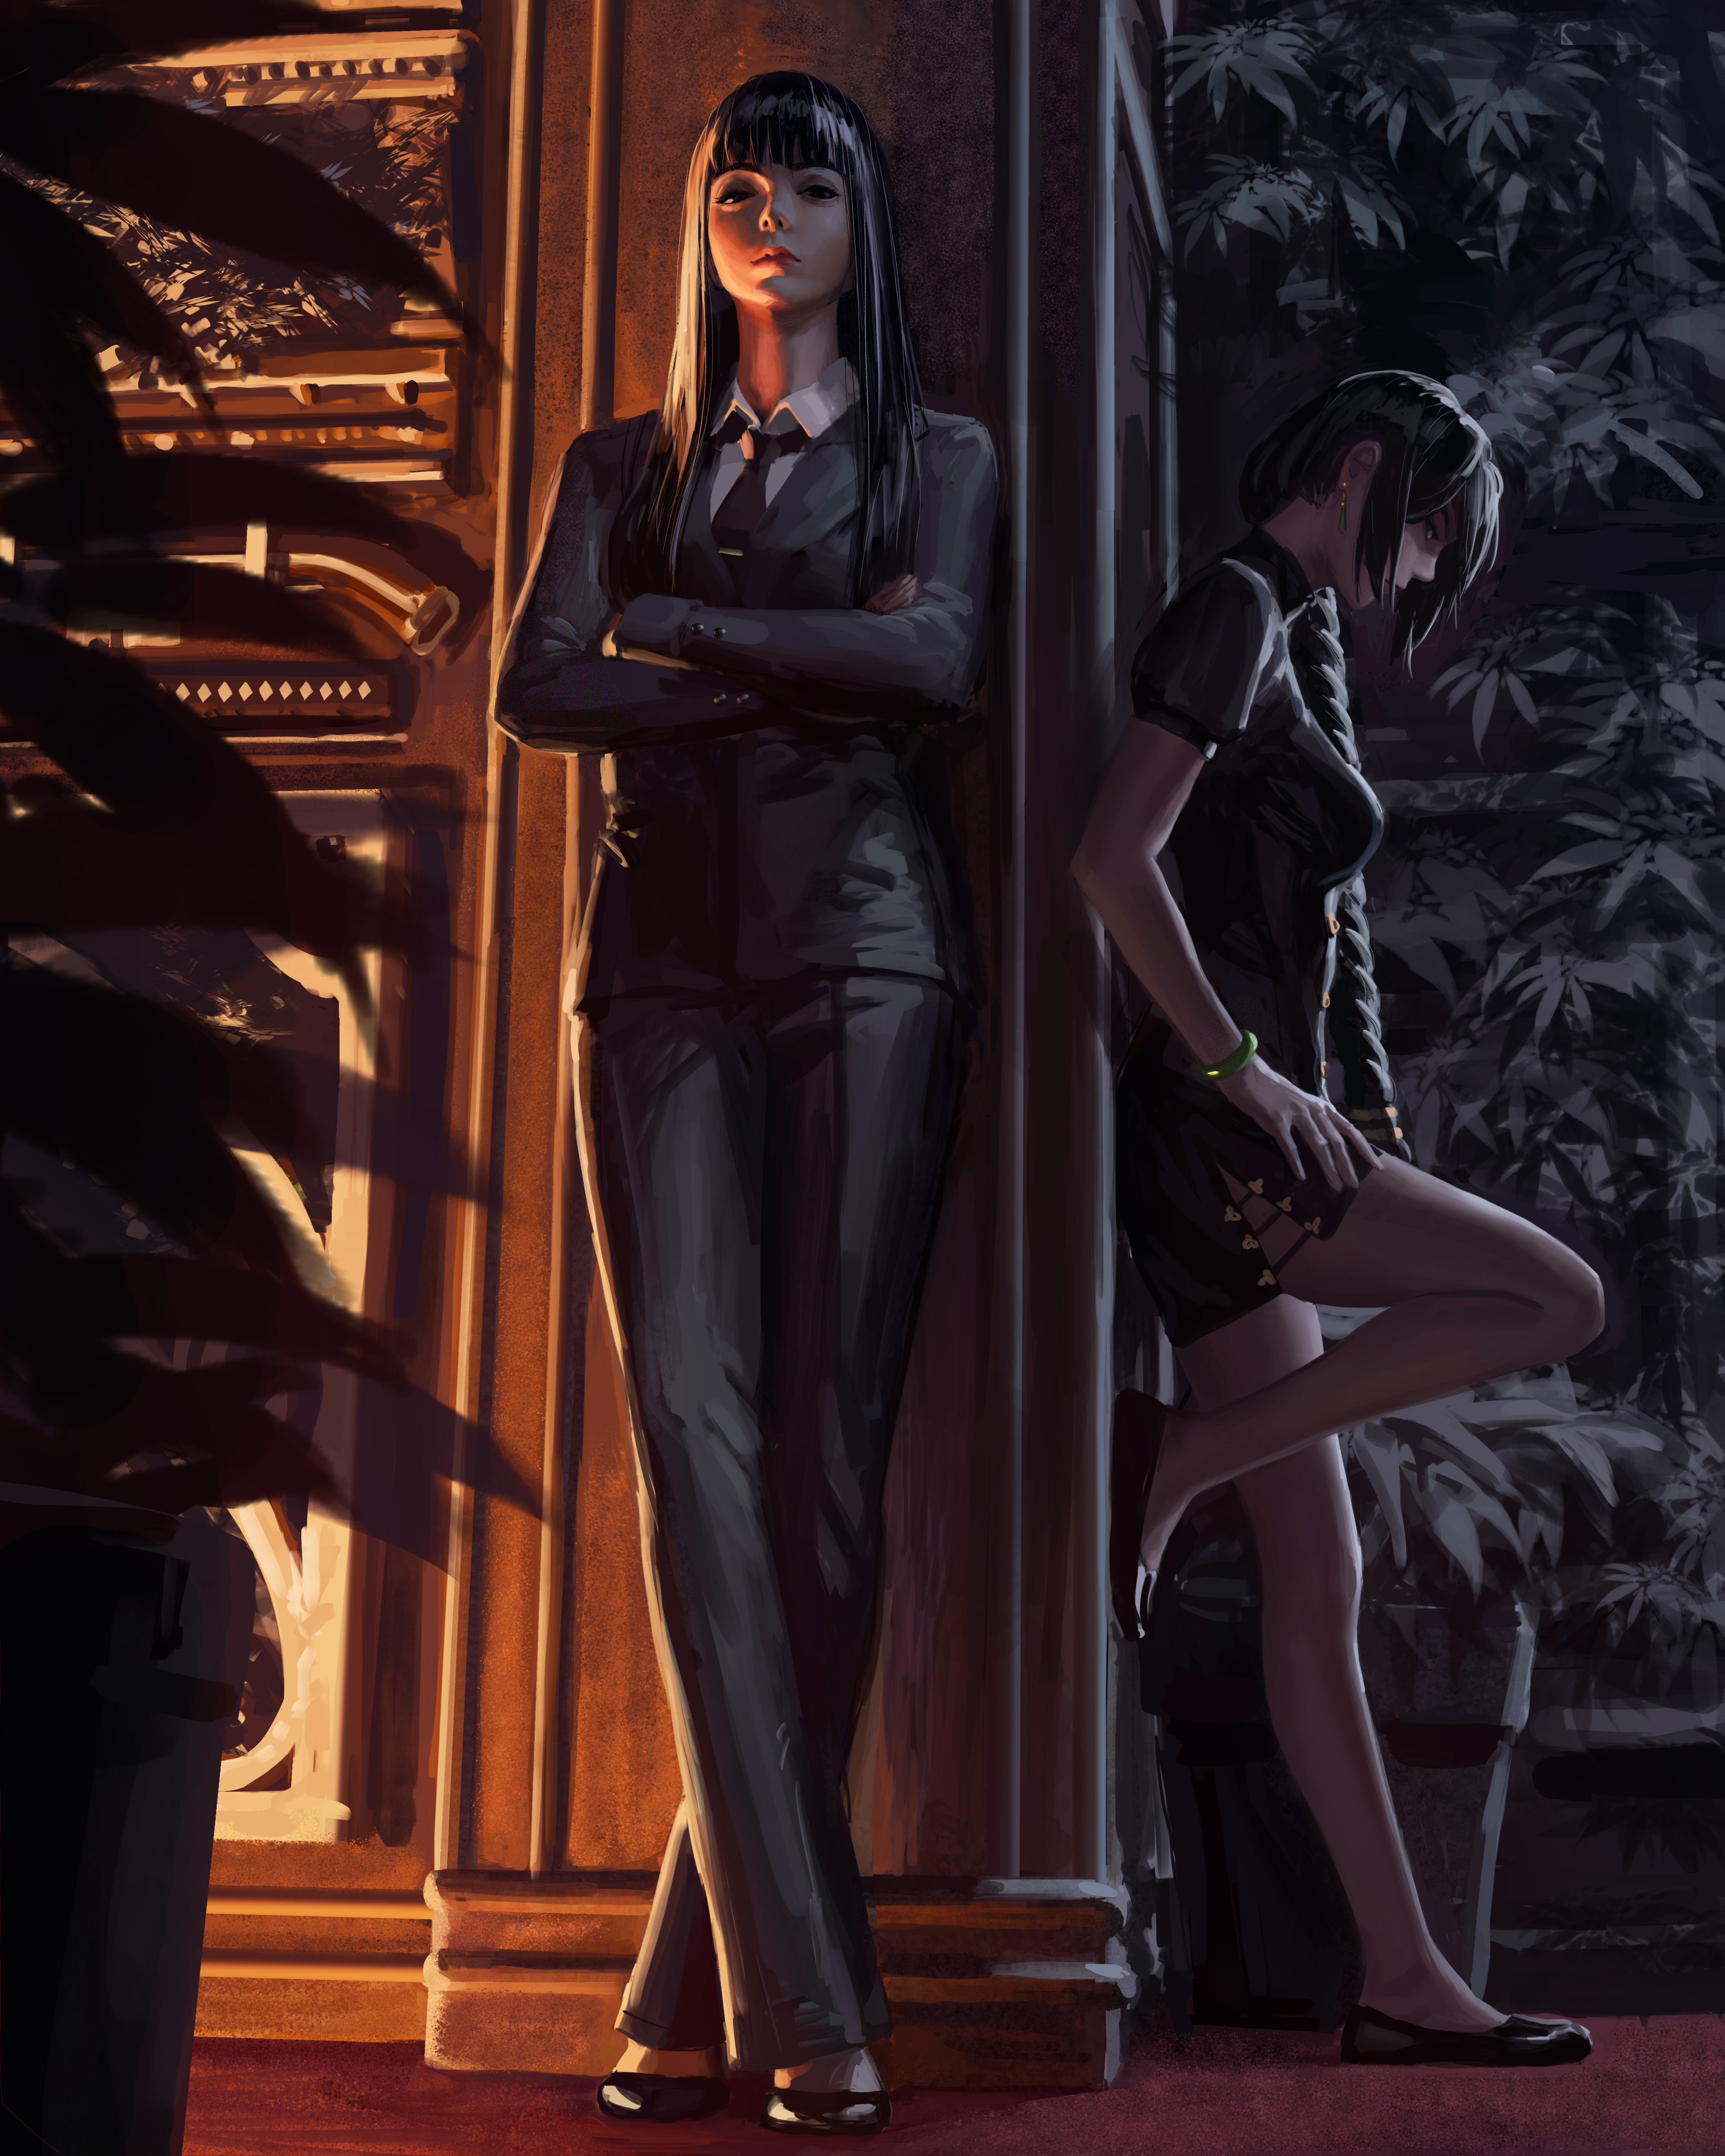 Women Suits Cheongsam Black Hair Black Clothing Legs Crossed Original Characters GUWEiZ Concept Art  5000x6250